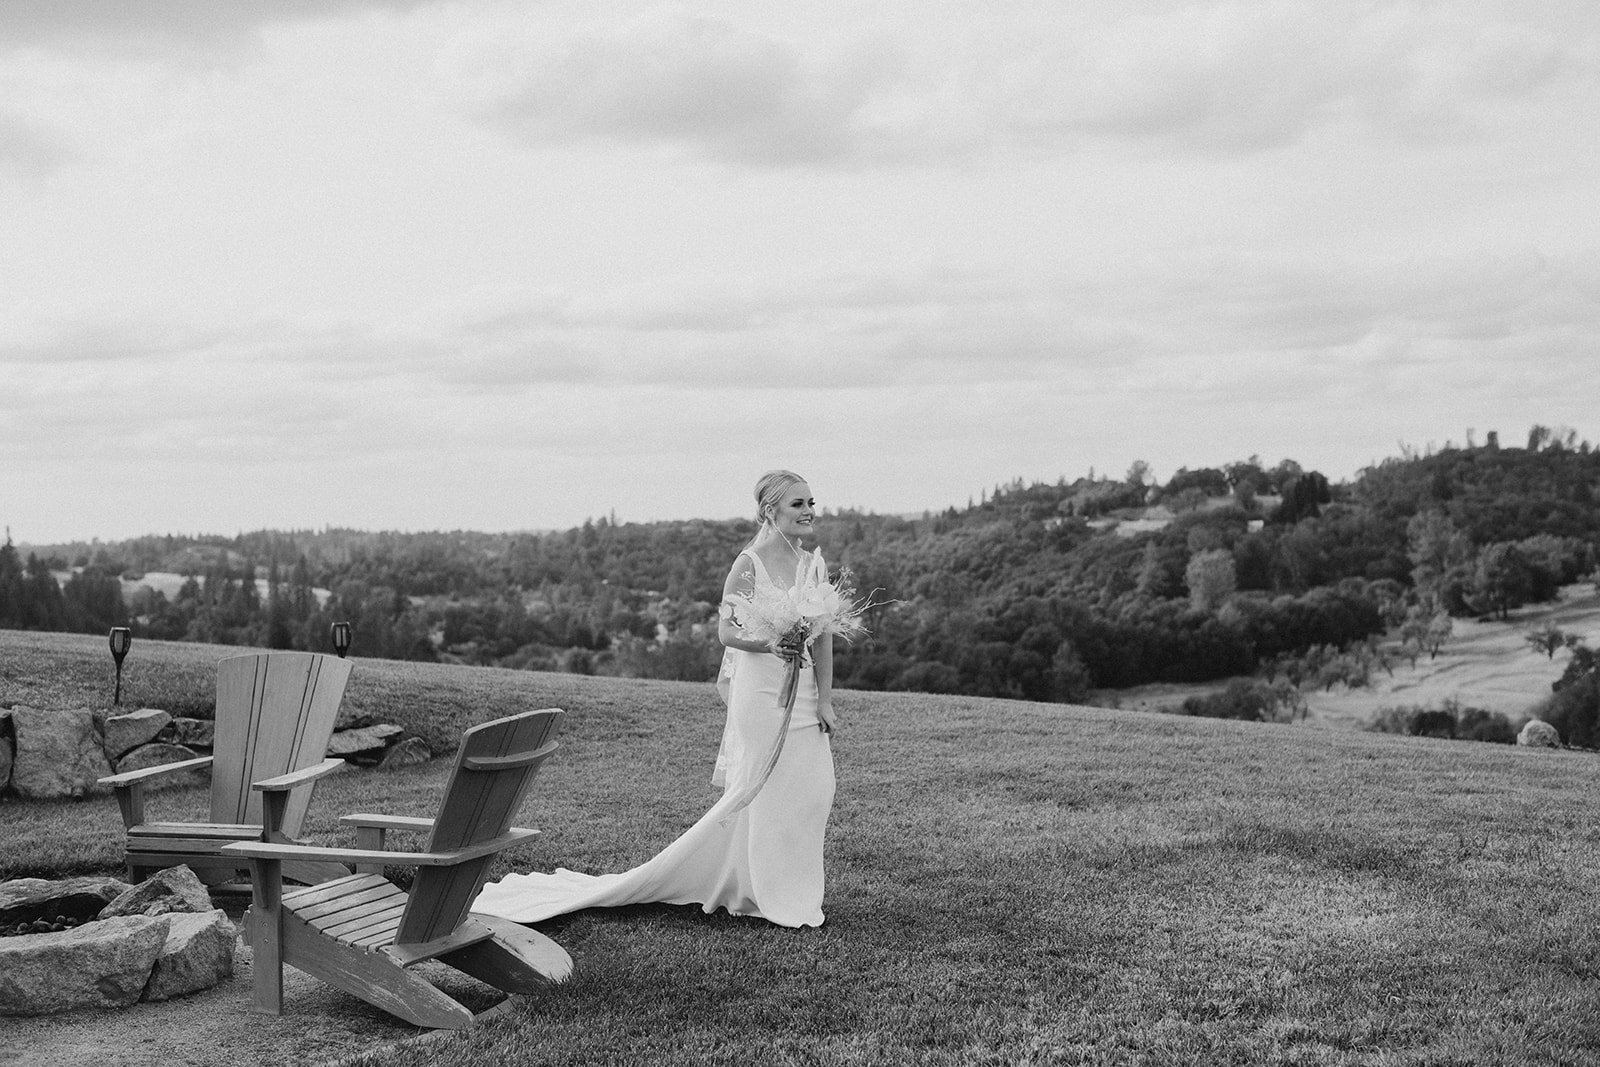 Alysssa-Kristin-Sydney-Wedding-Dress-Heidi-and-Josue-07.jpg